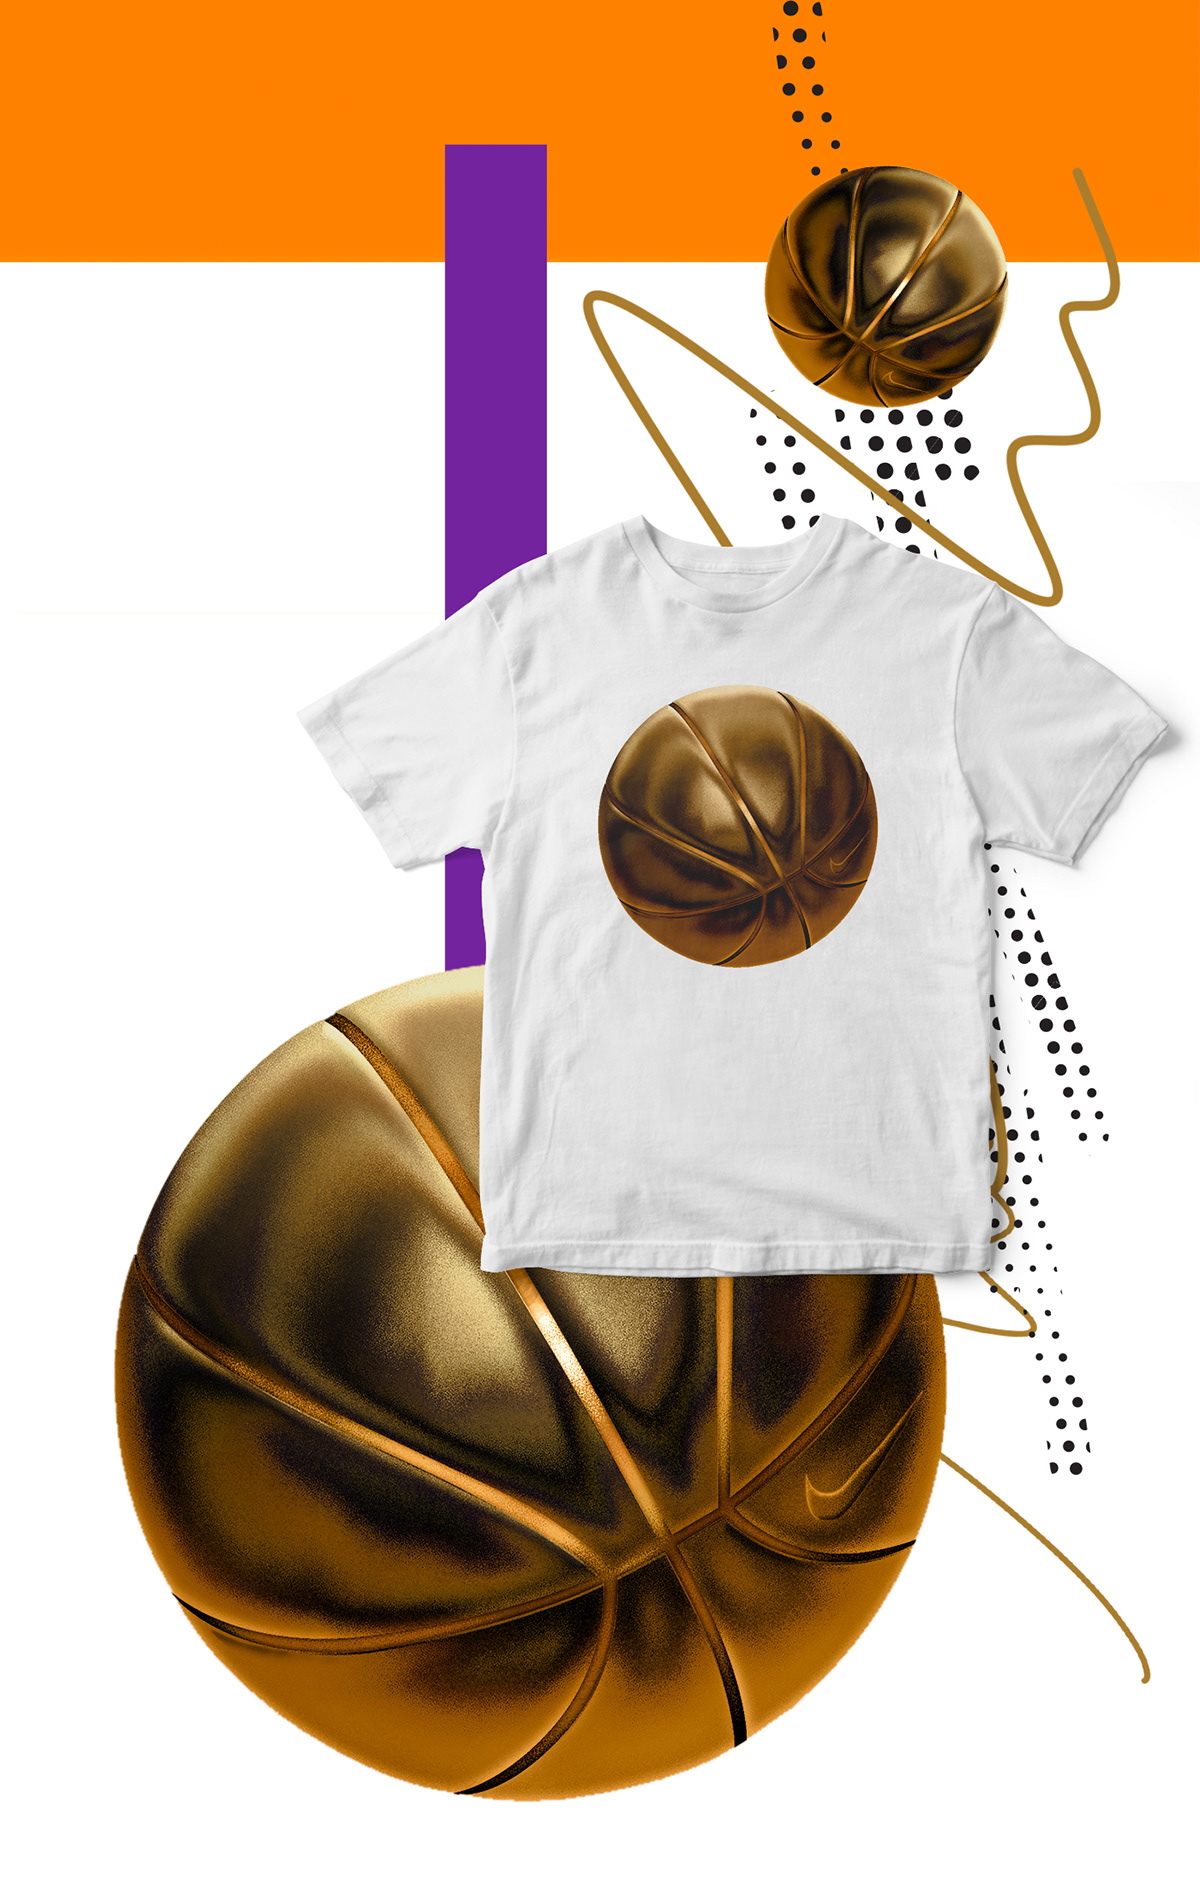 3D basketball iridescent metal Nike poster sport tshirt